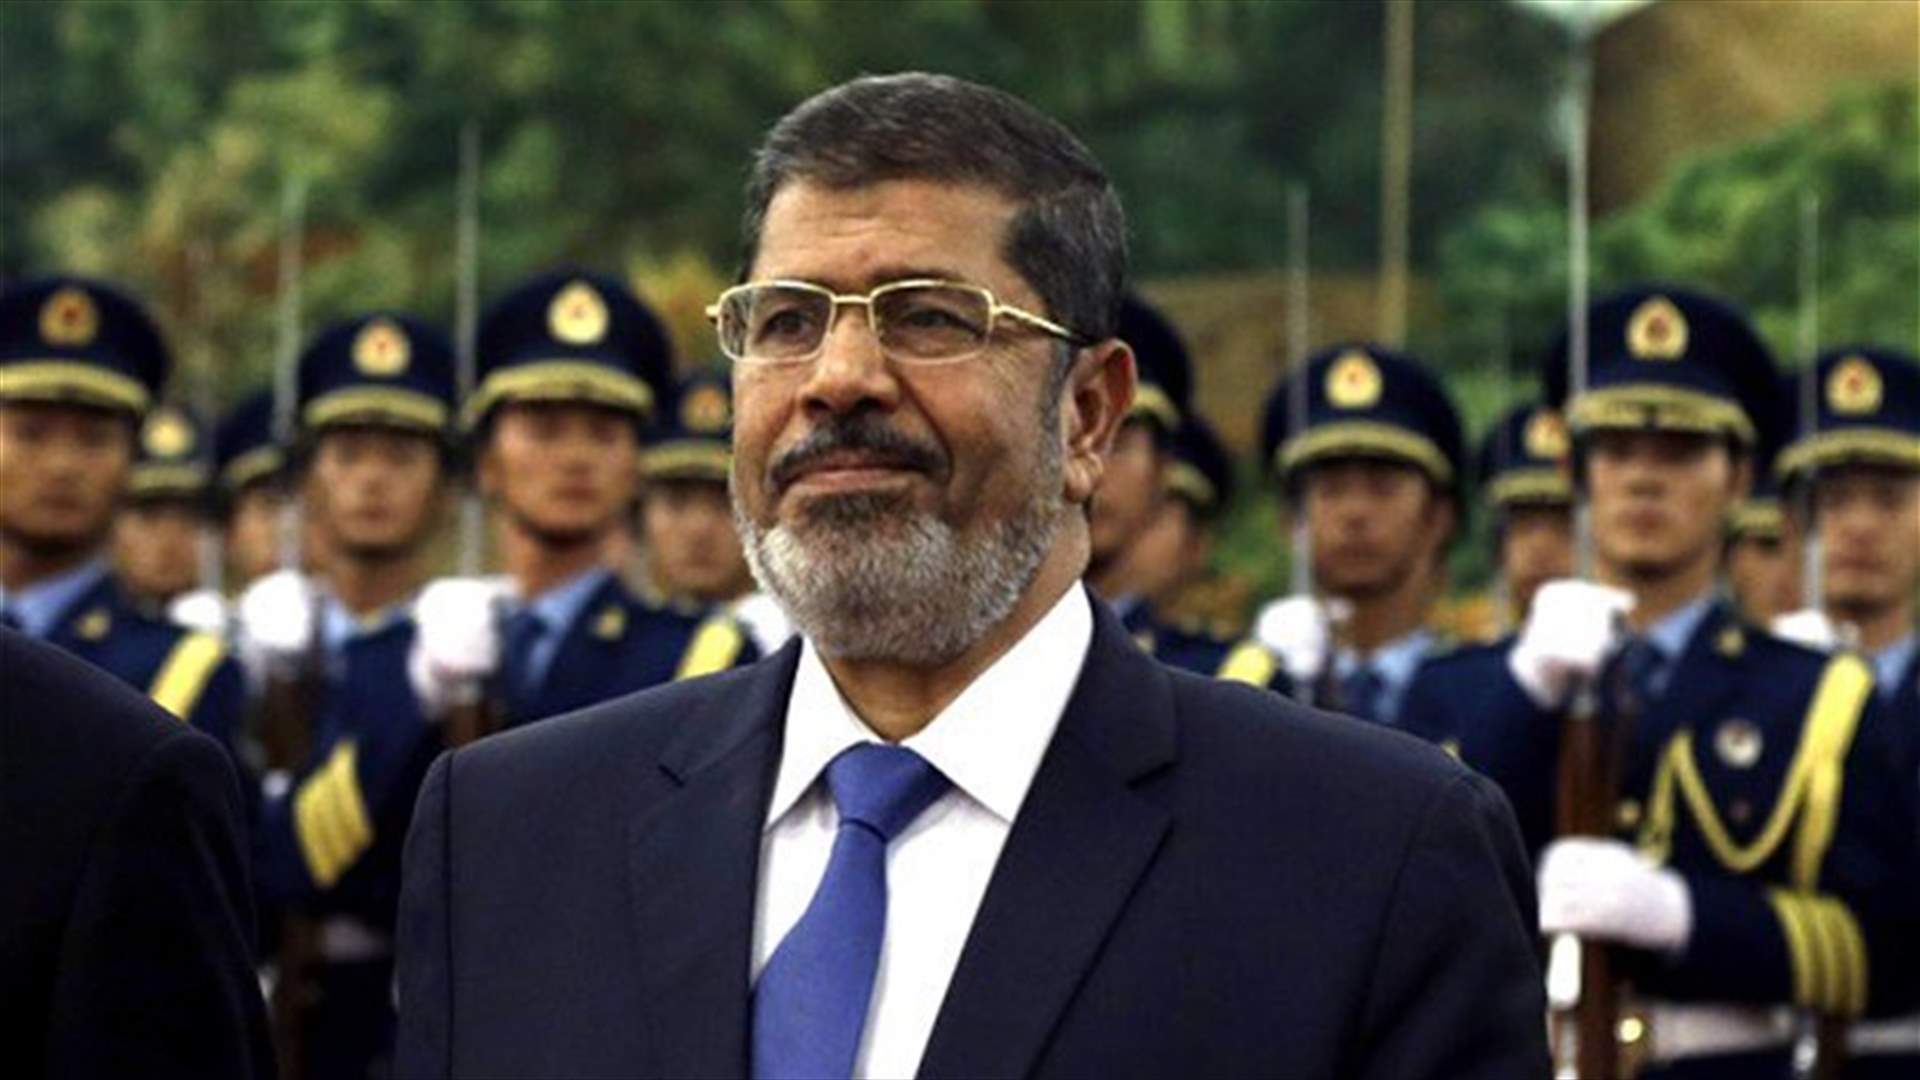 Egyptian court hands ex-president Morsi another life sentence